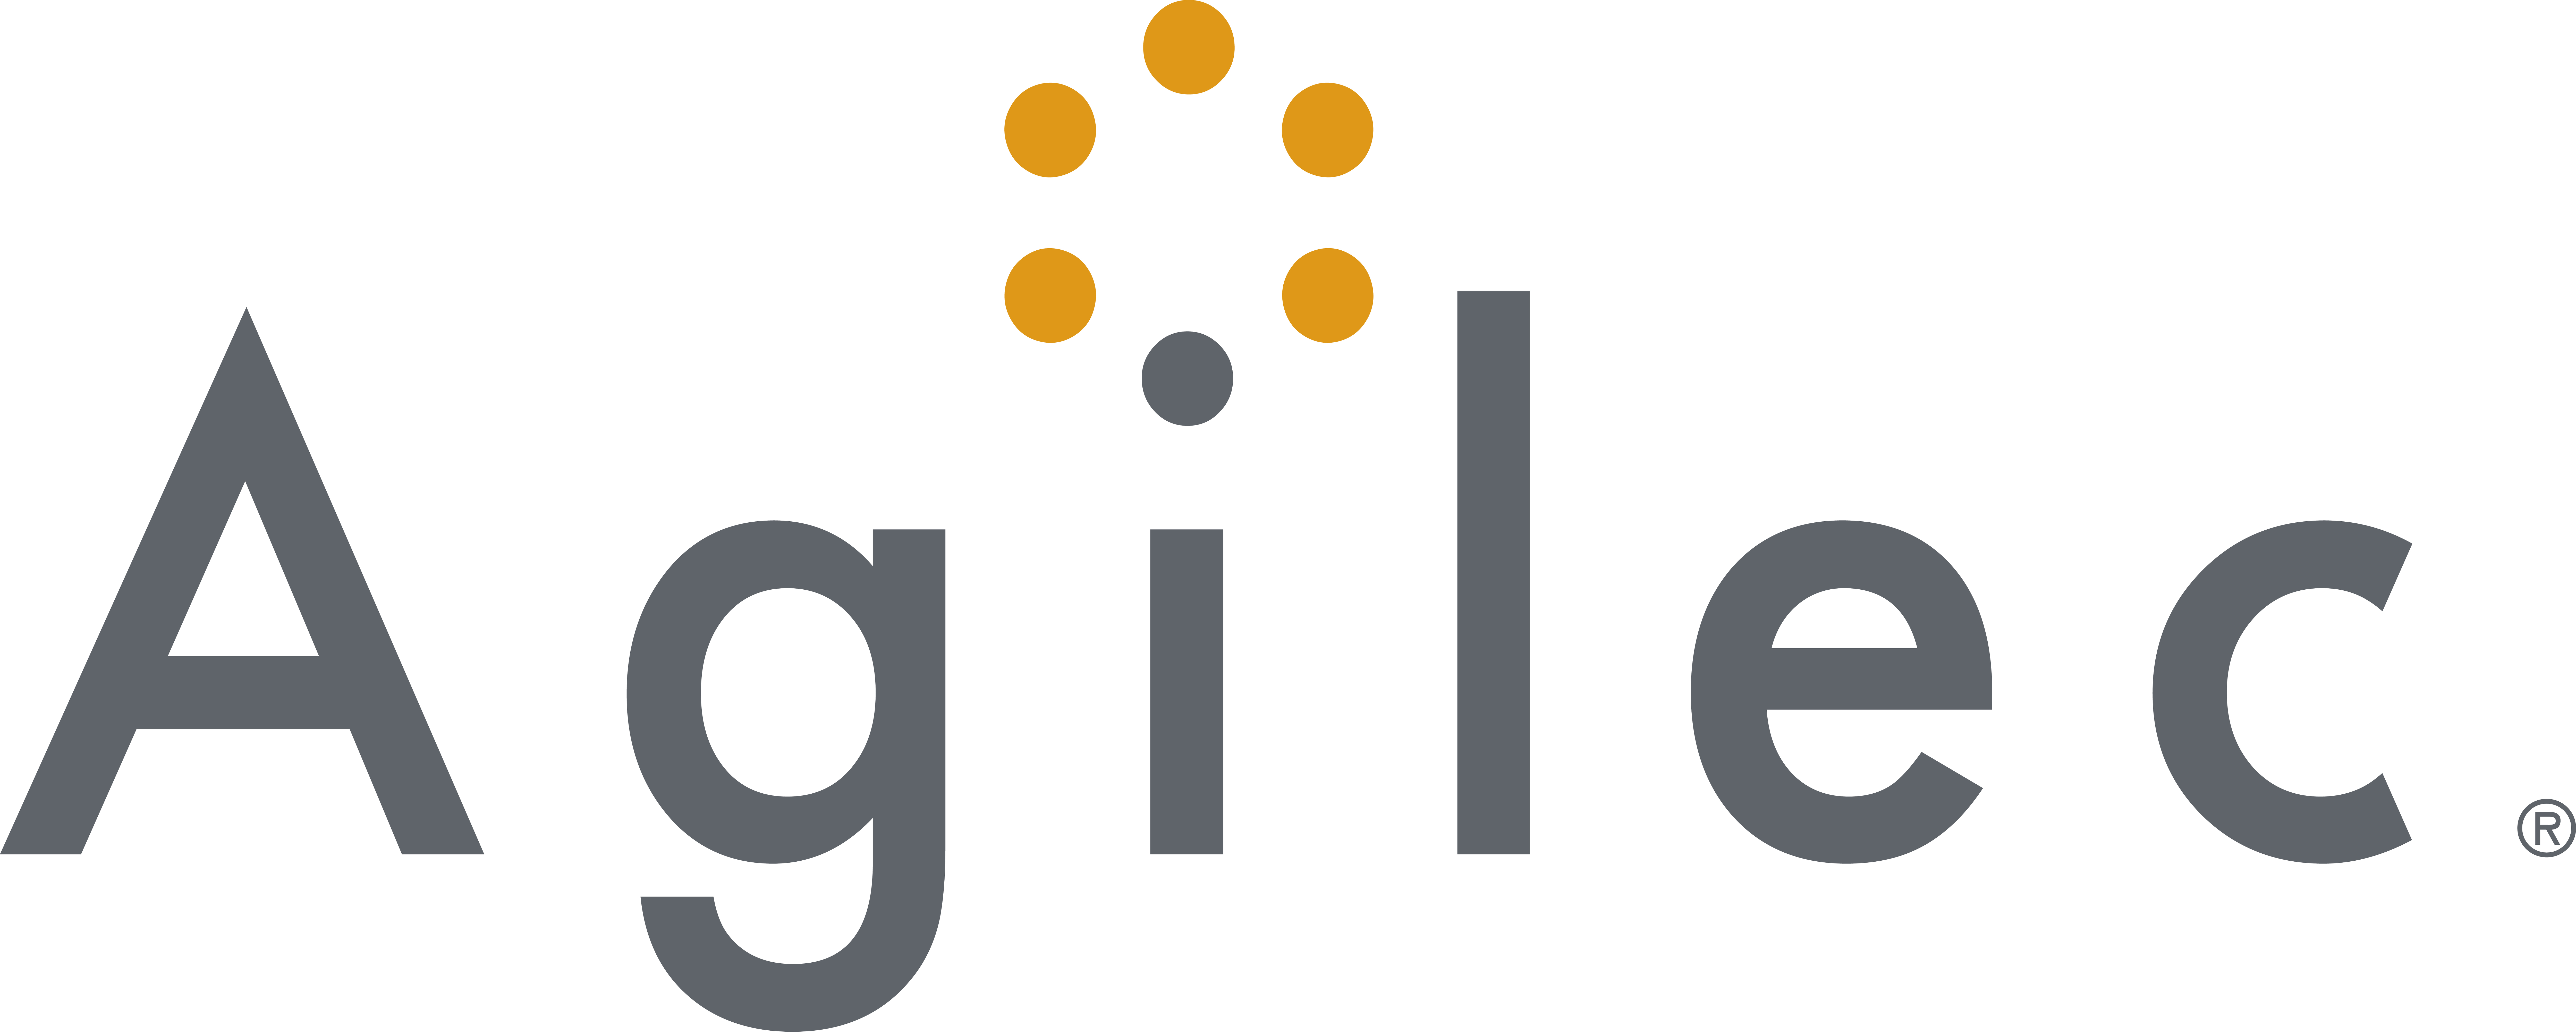 The Agelic logo